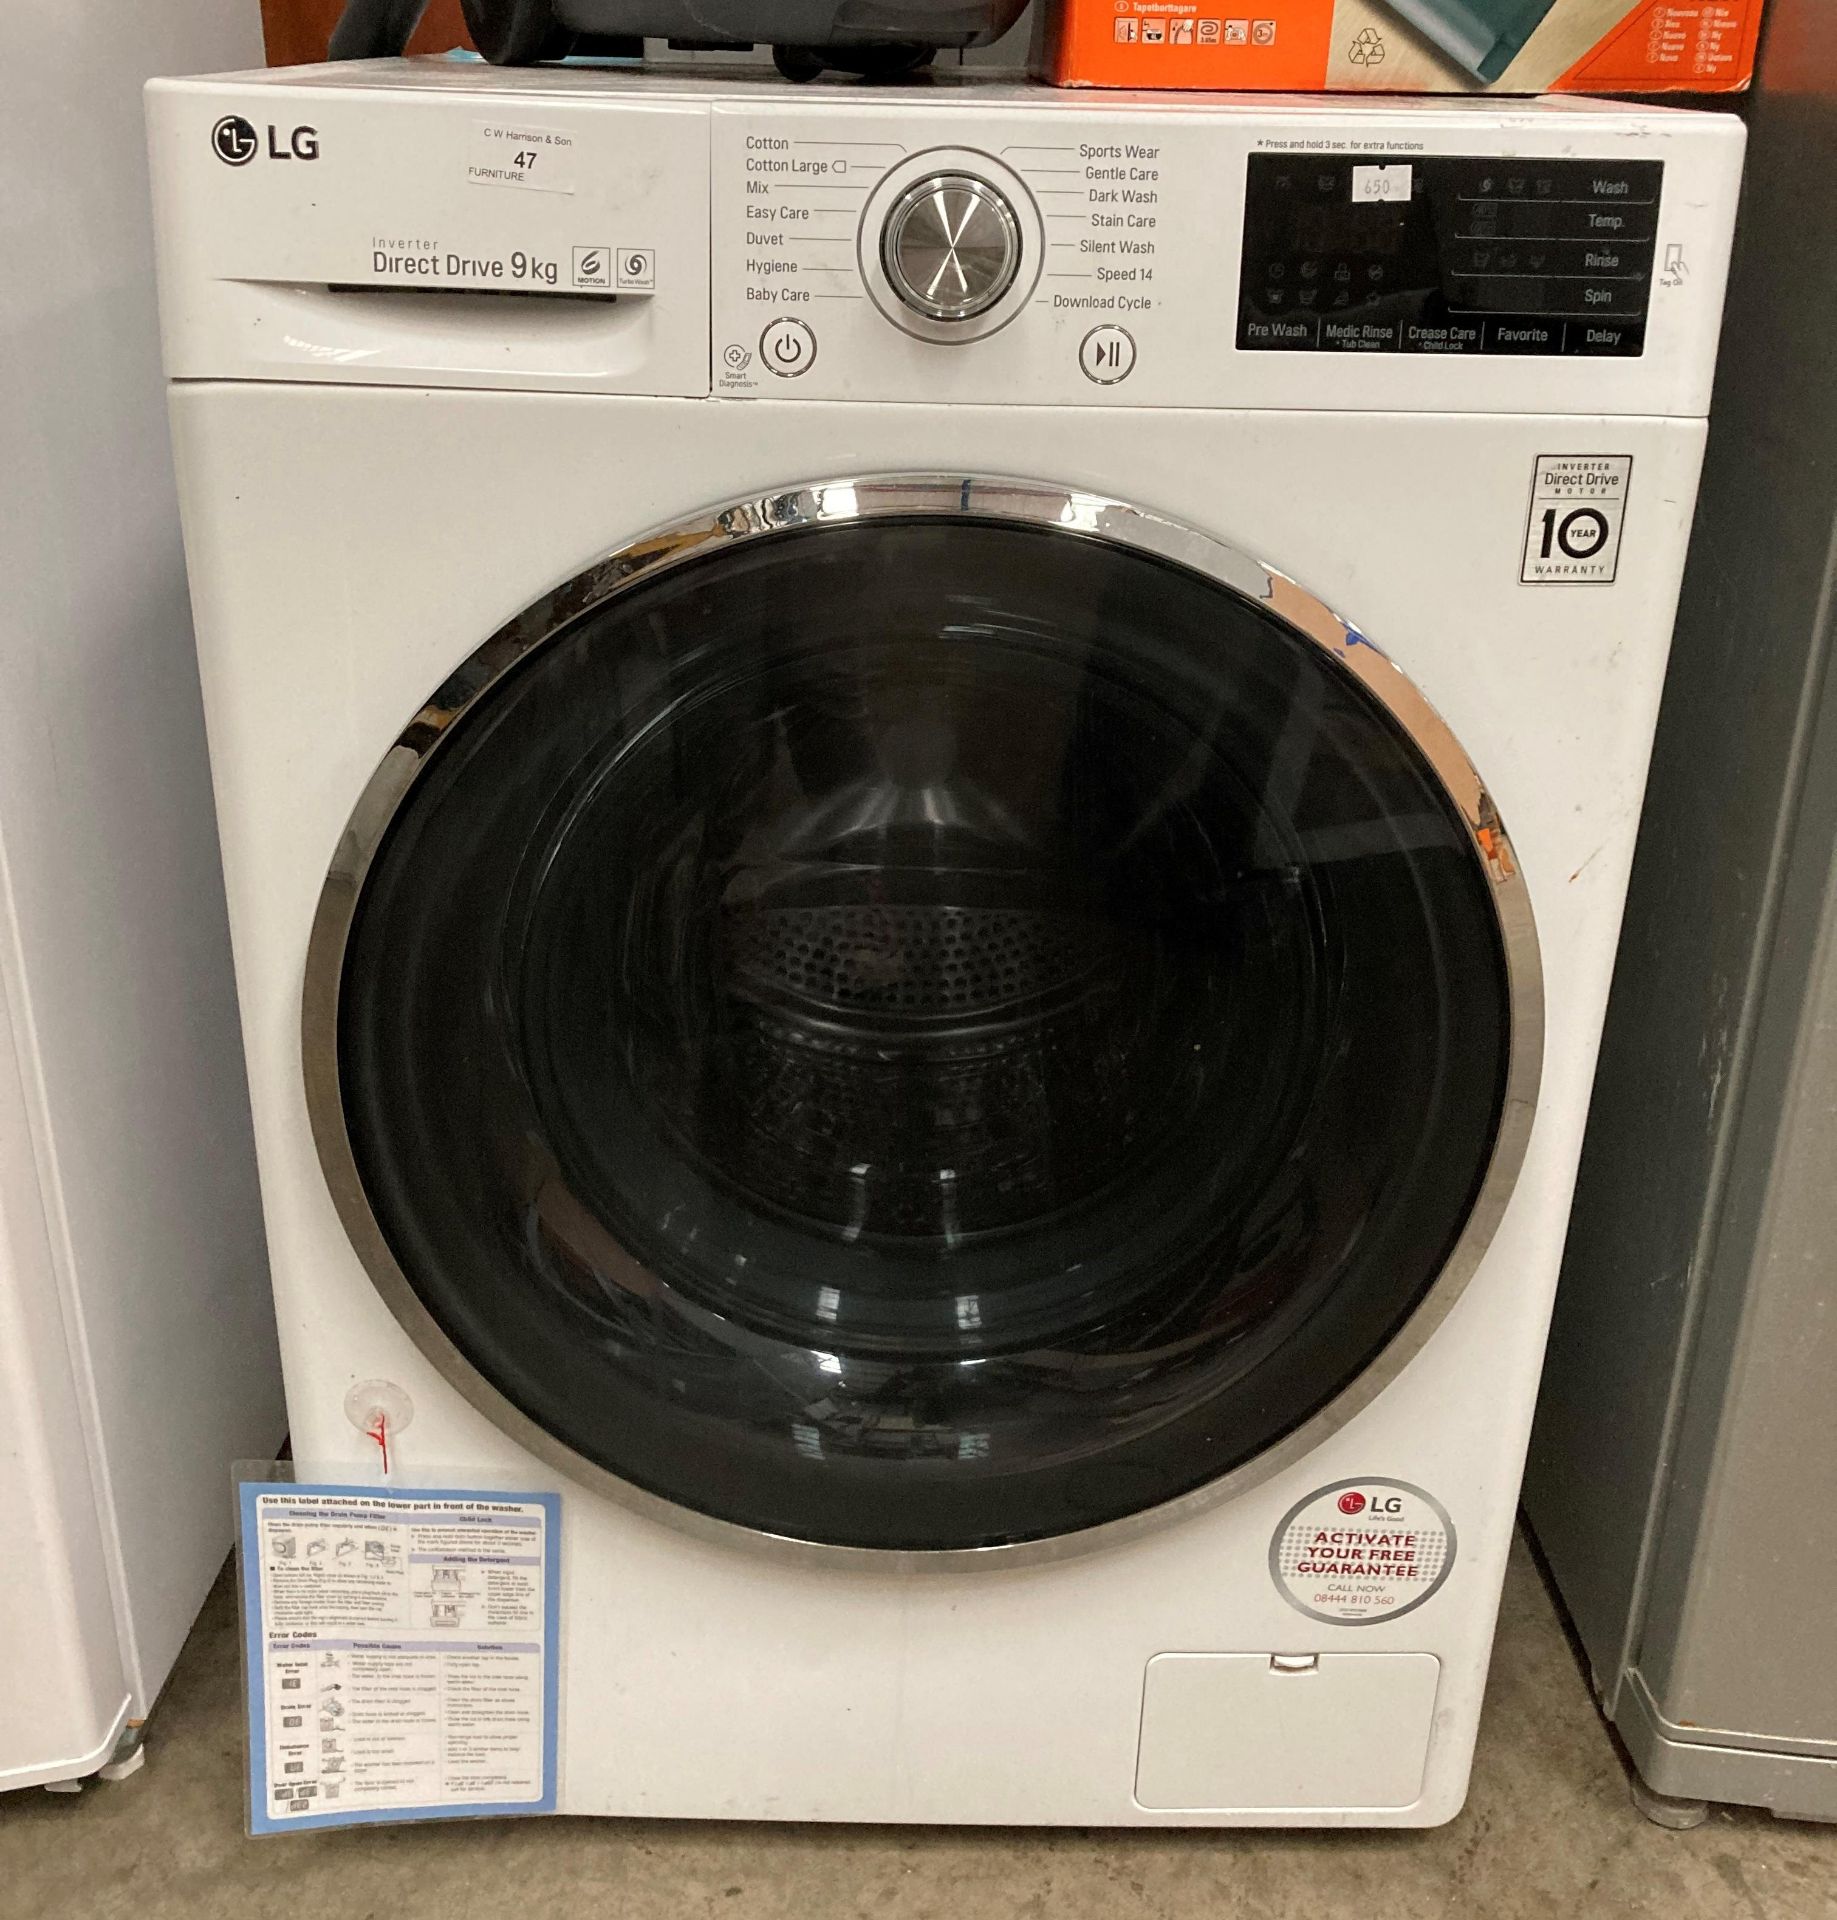 An LG Inverter Direct Drive 9kg automatic washing machine